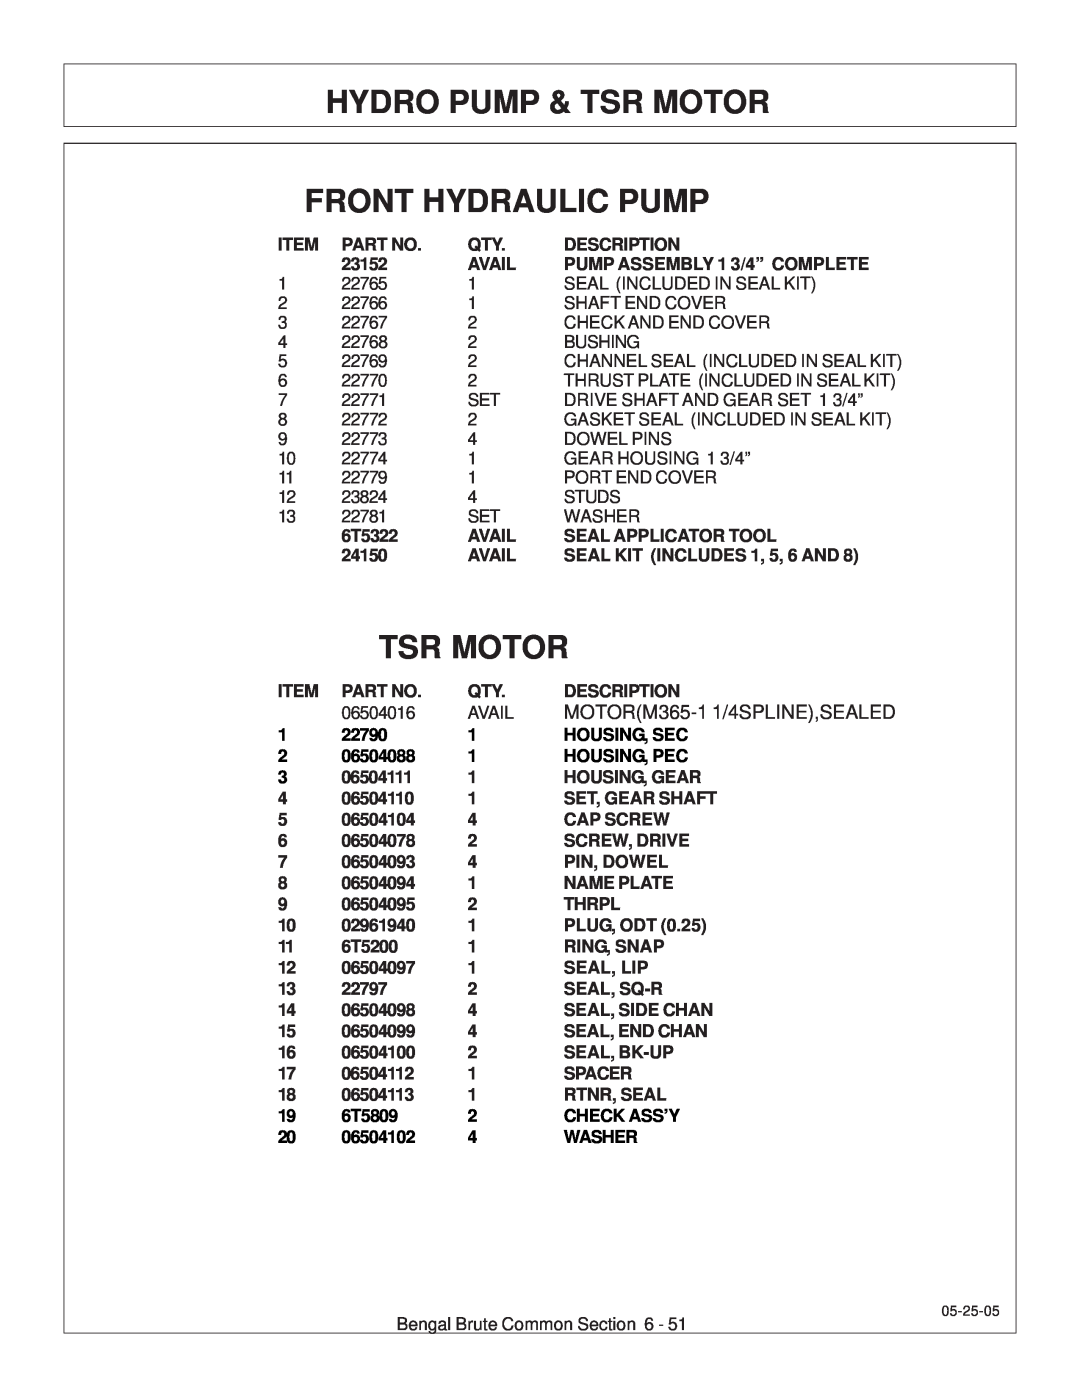 Tiger JD 62-6420 Hydro Pump & Tsr Motor, Front Hydraulic Pump, MOTORM365-1 1/4SPLINE,SEALED, Description, 23152, Avail 